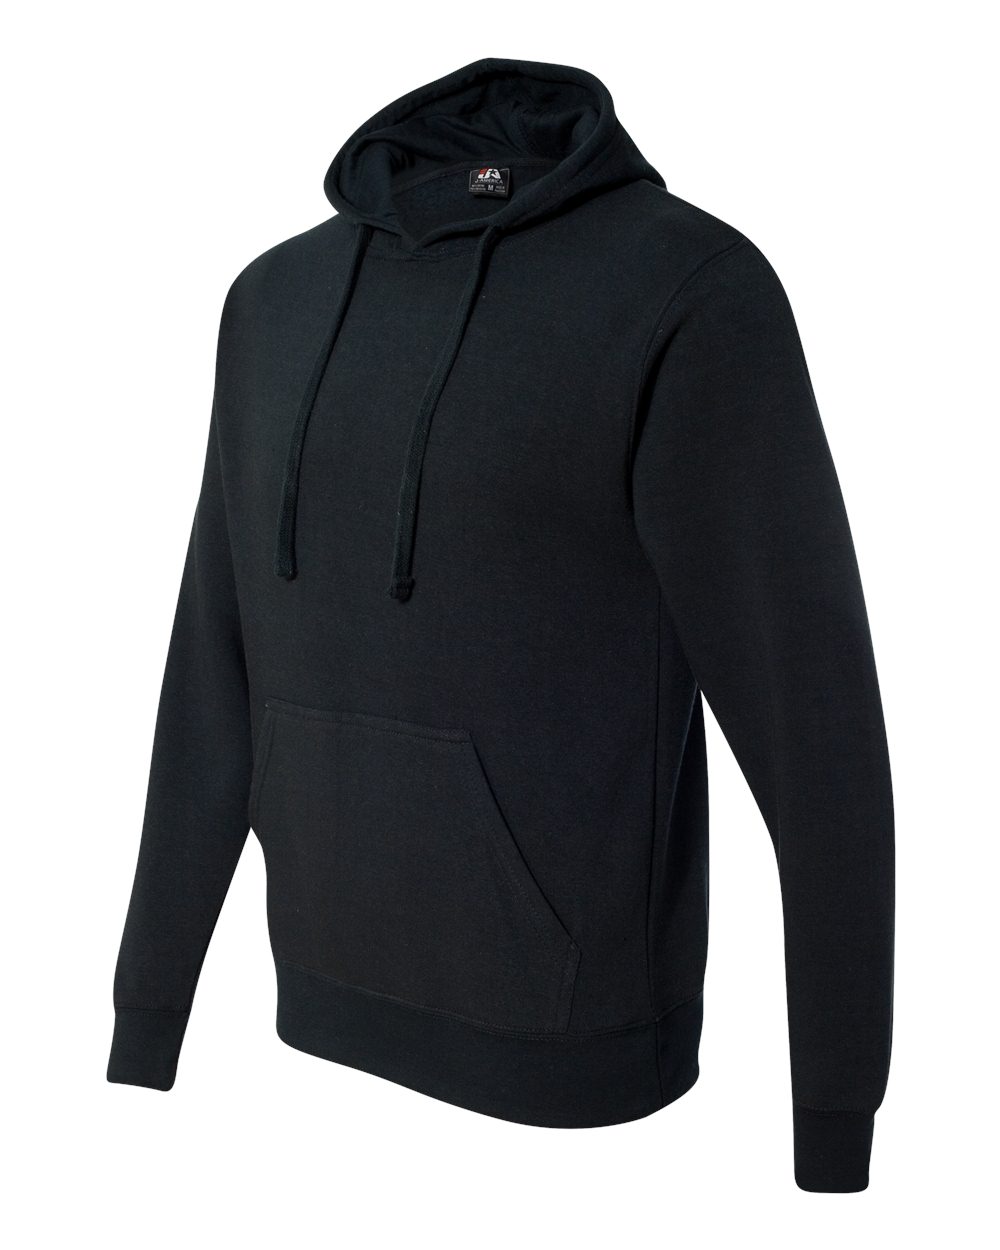 J. America Cloud Fleece Hooded Pullover Sweatshirt - 8620